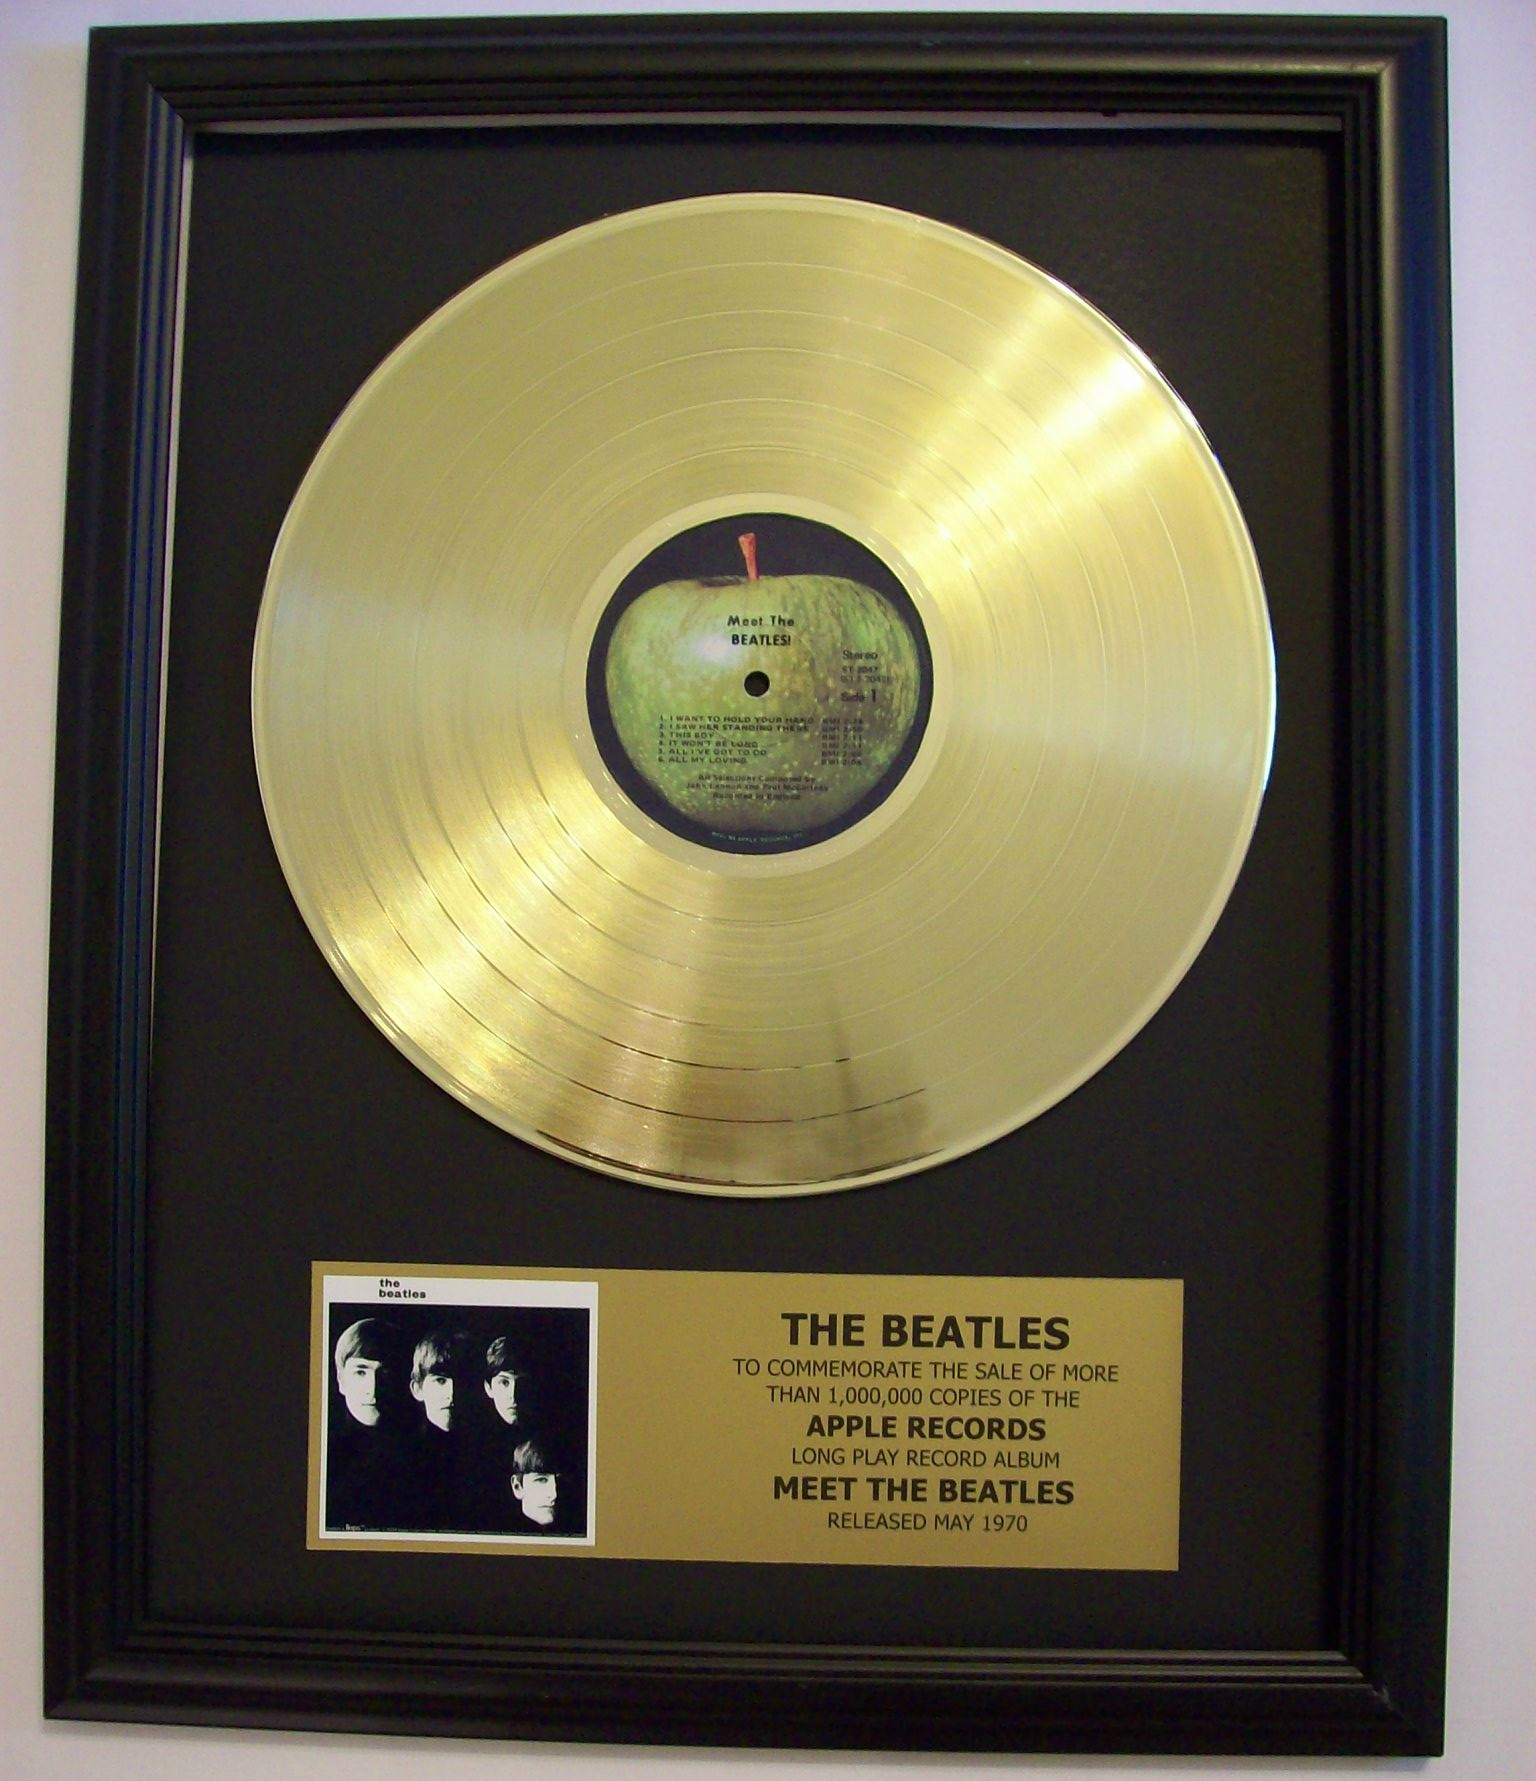 Category: Beatles